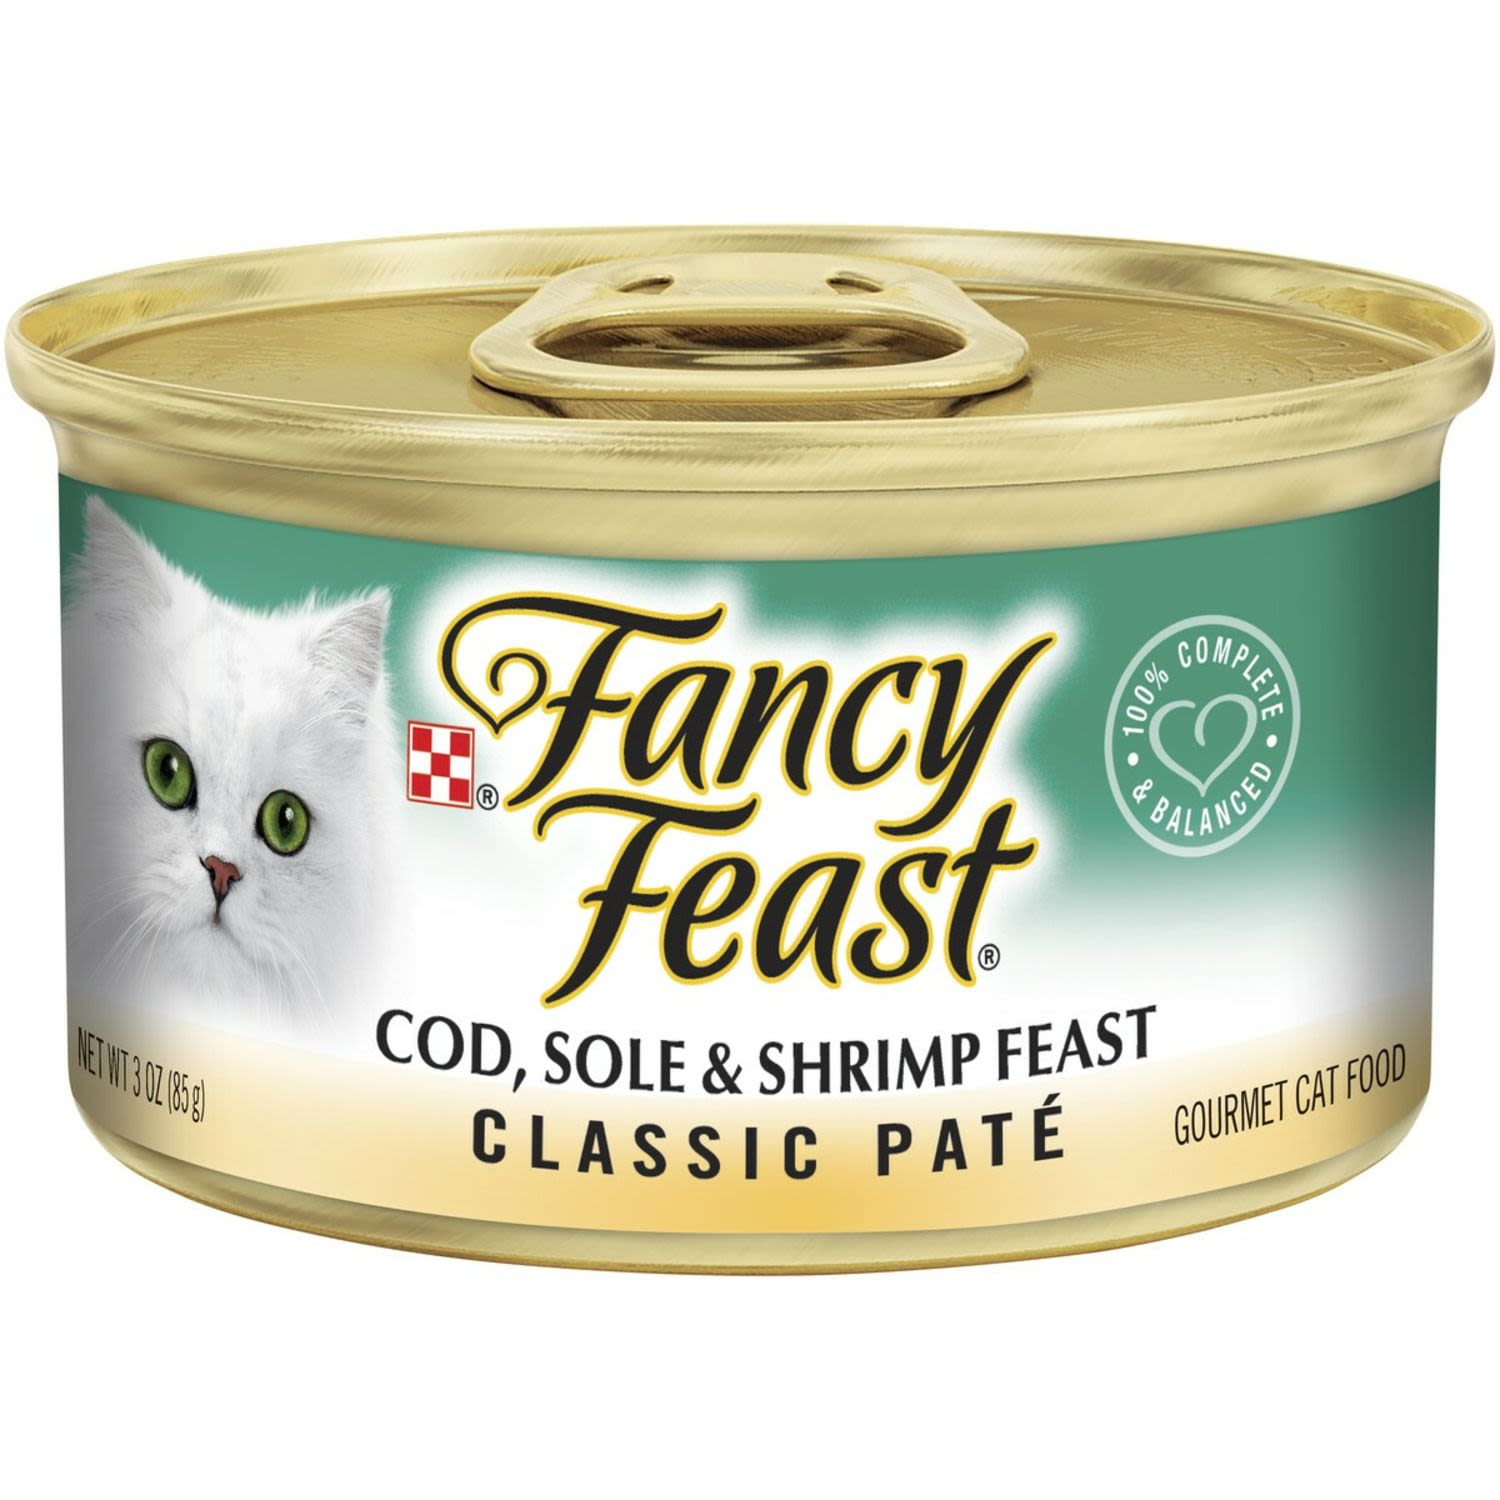 Fancy Feast Cod, Sole & Shrimp Feast Classic Pate, 85 Gram